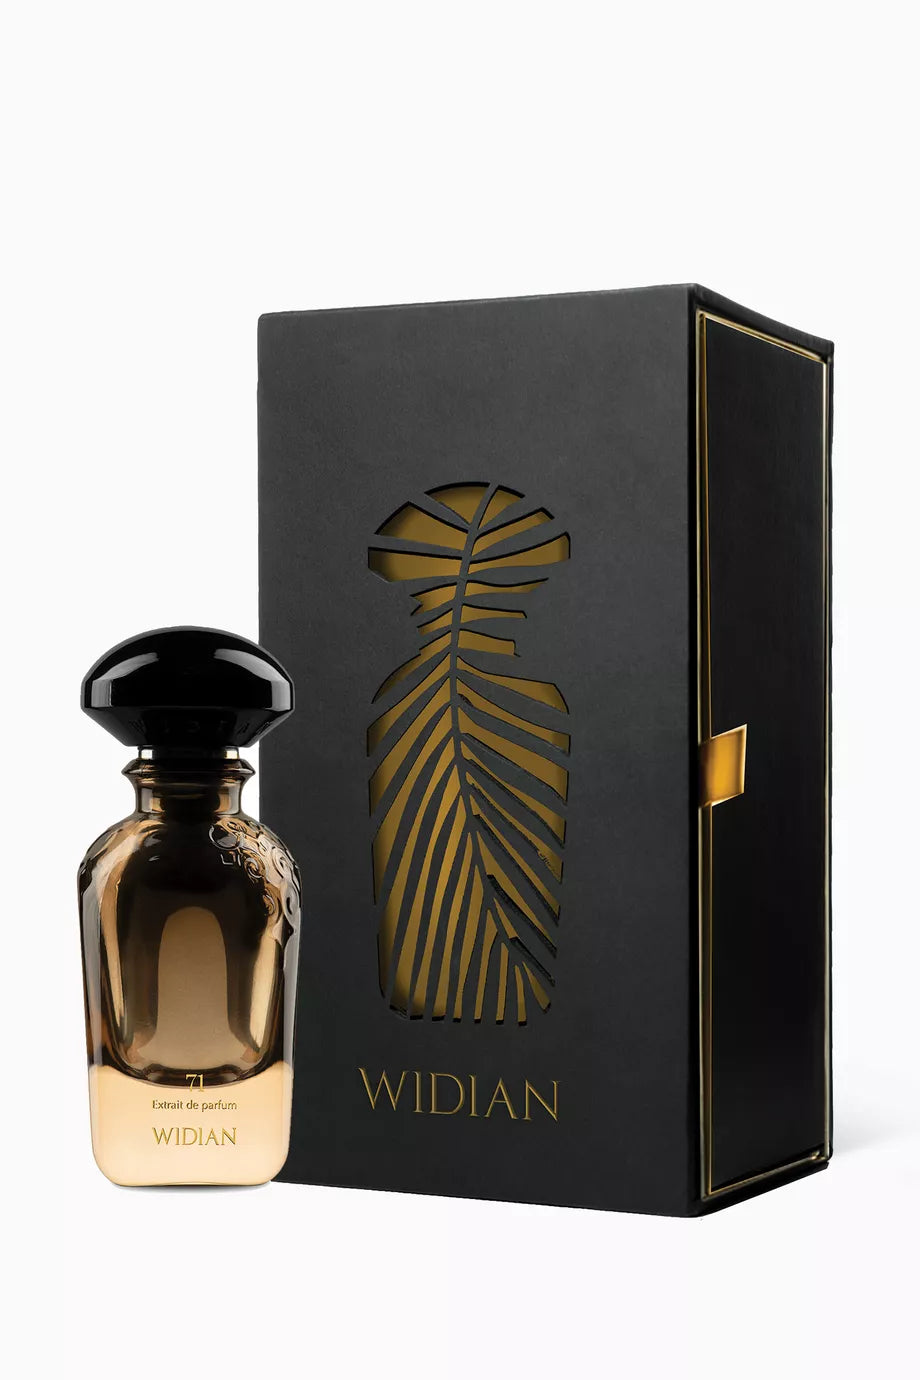 WIDIAN black II - morgan-perfume